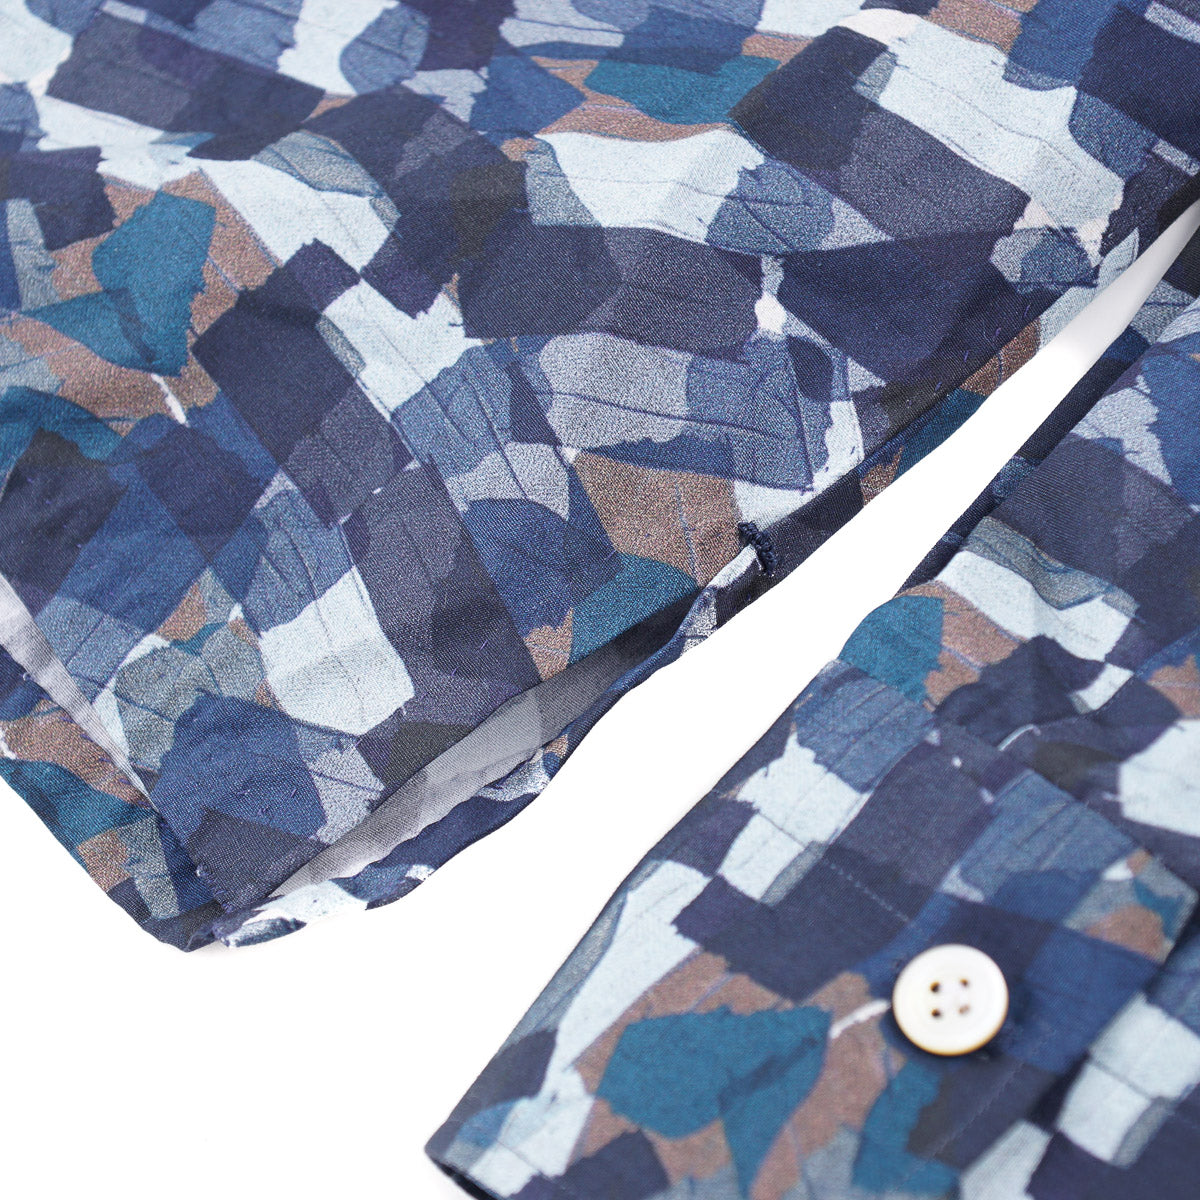 Kiton Geometric Patterned Cotton Shirt - Top Shelf Apparel